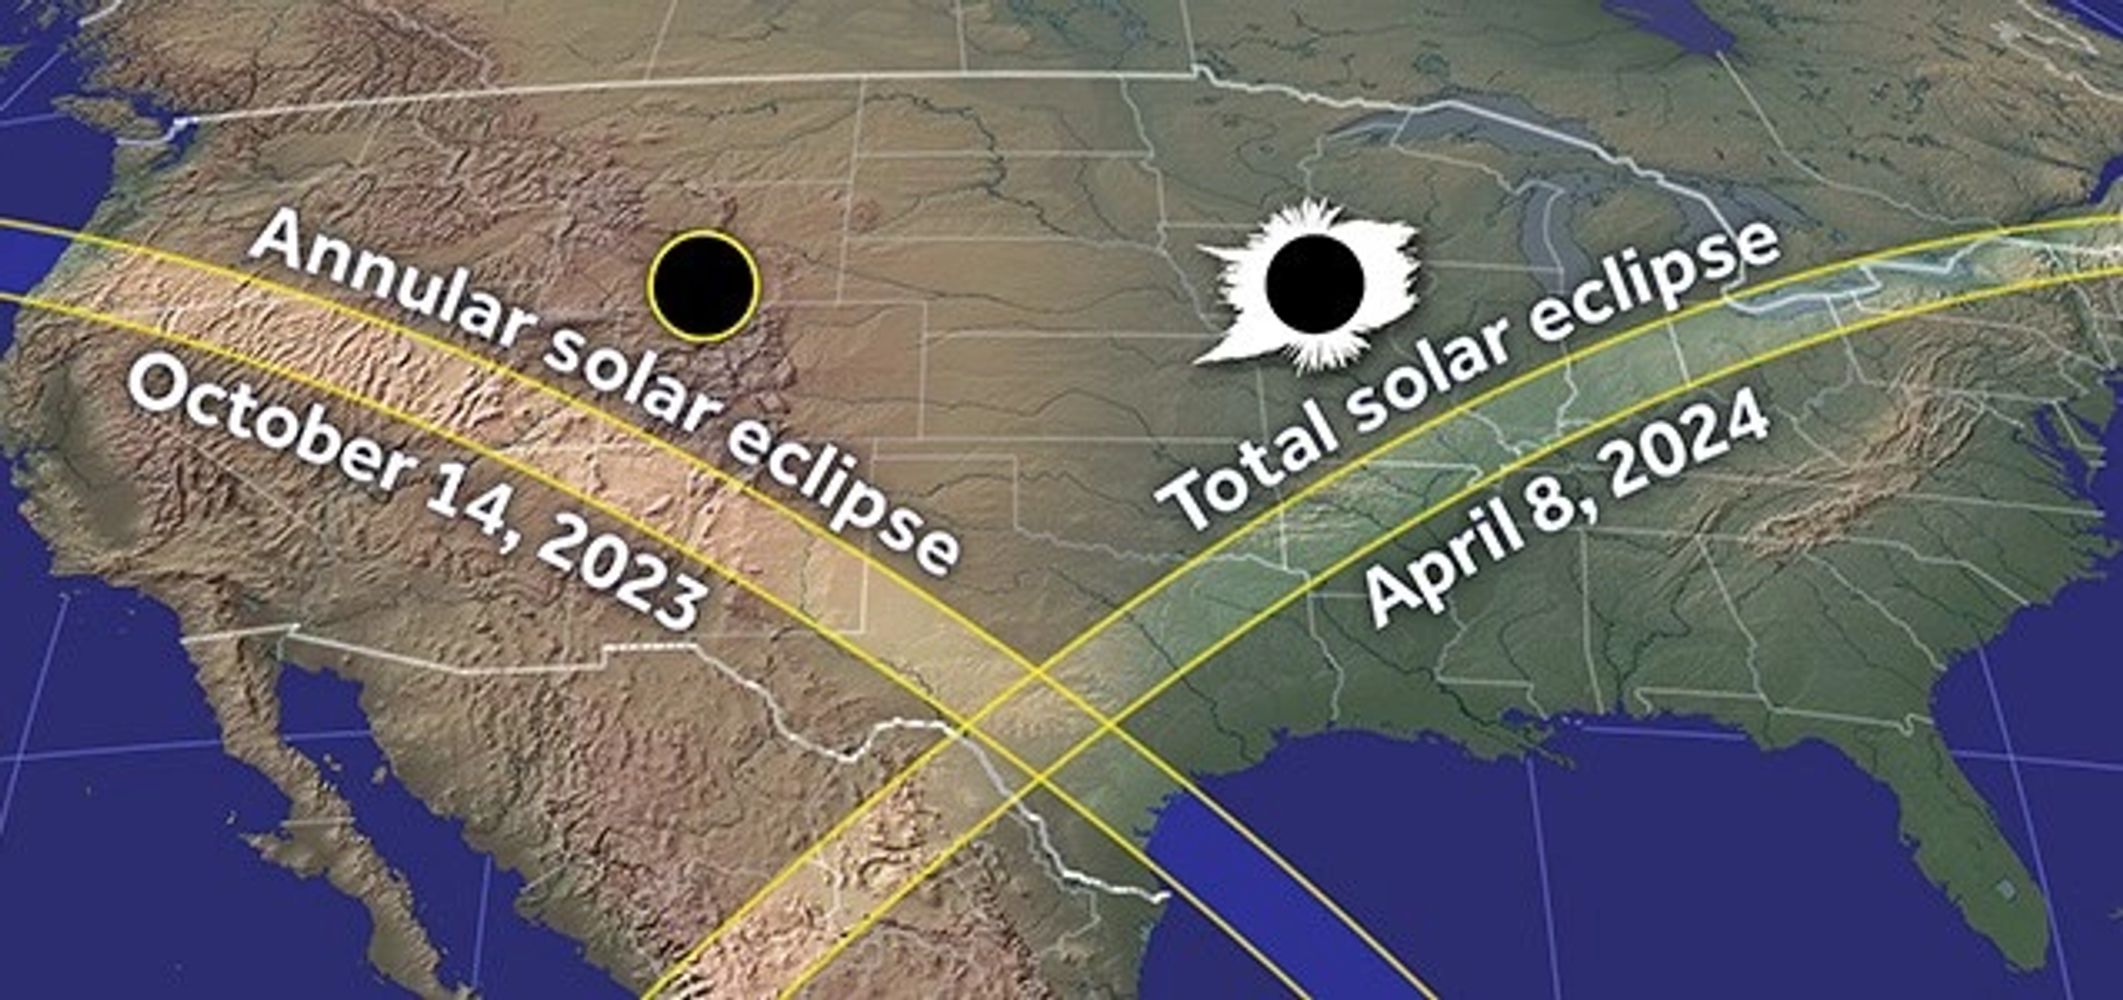 Eclipse 2024 resources